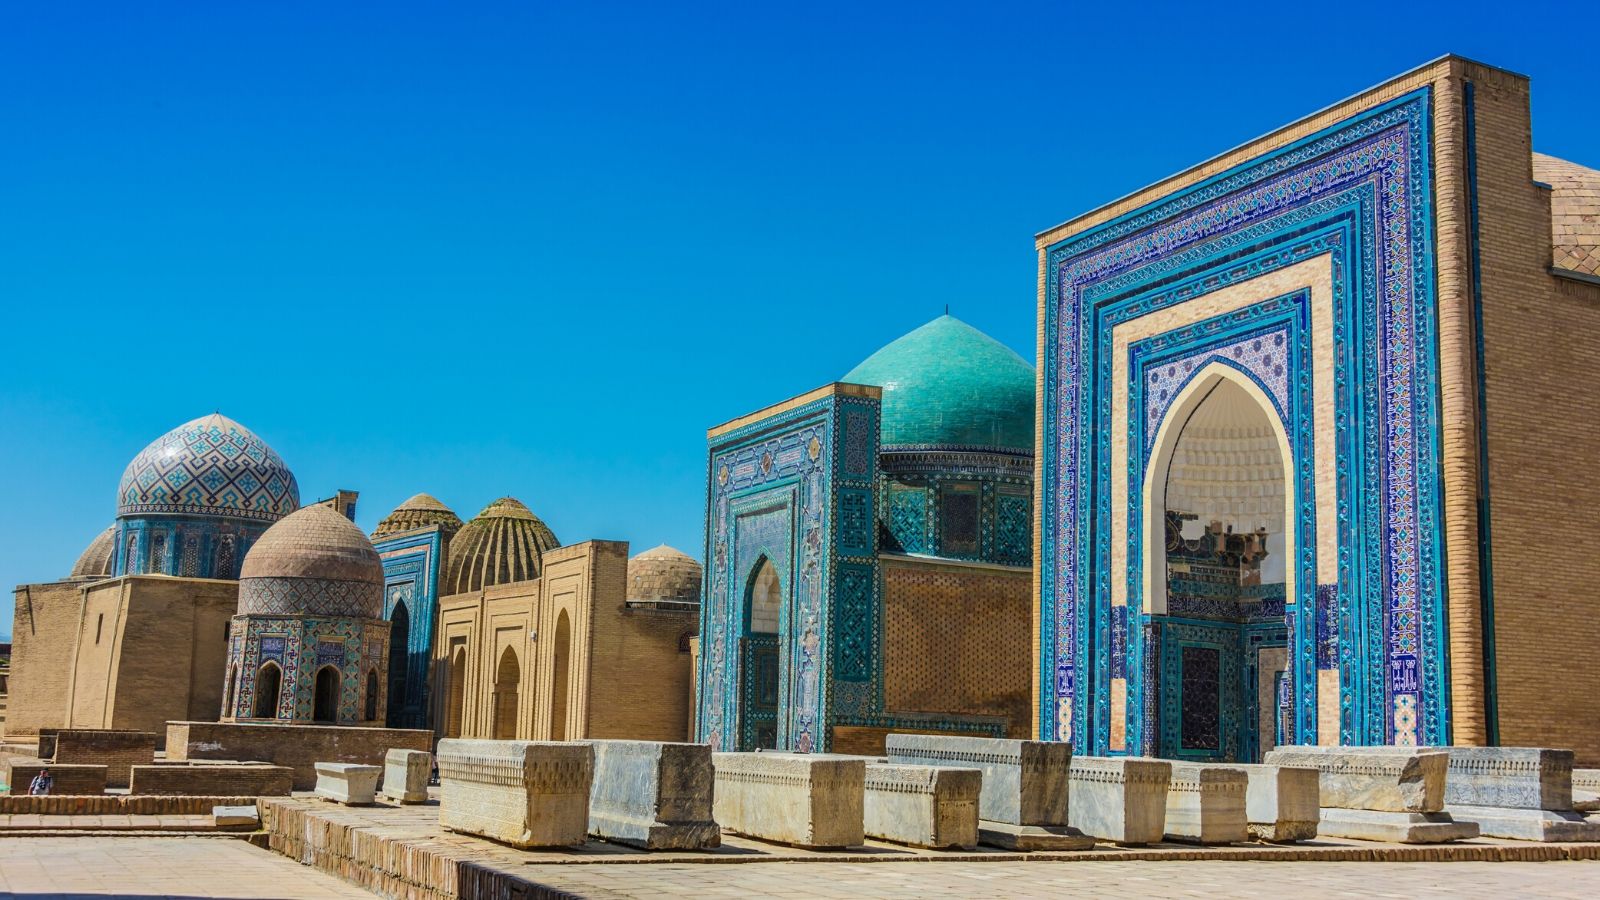 Banner Central Asia and the Silk Road Photography Tour with exention to Uzbekistan Shah-i-Zinda Necropolis with award-winning photographer Ignacio Palacios